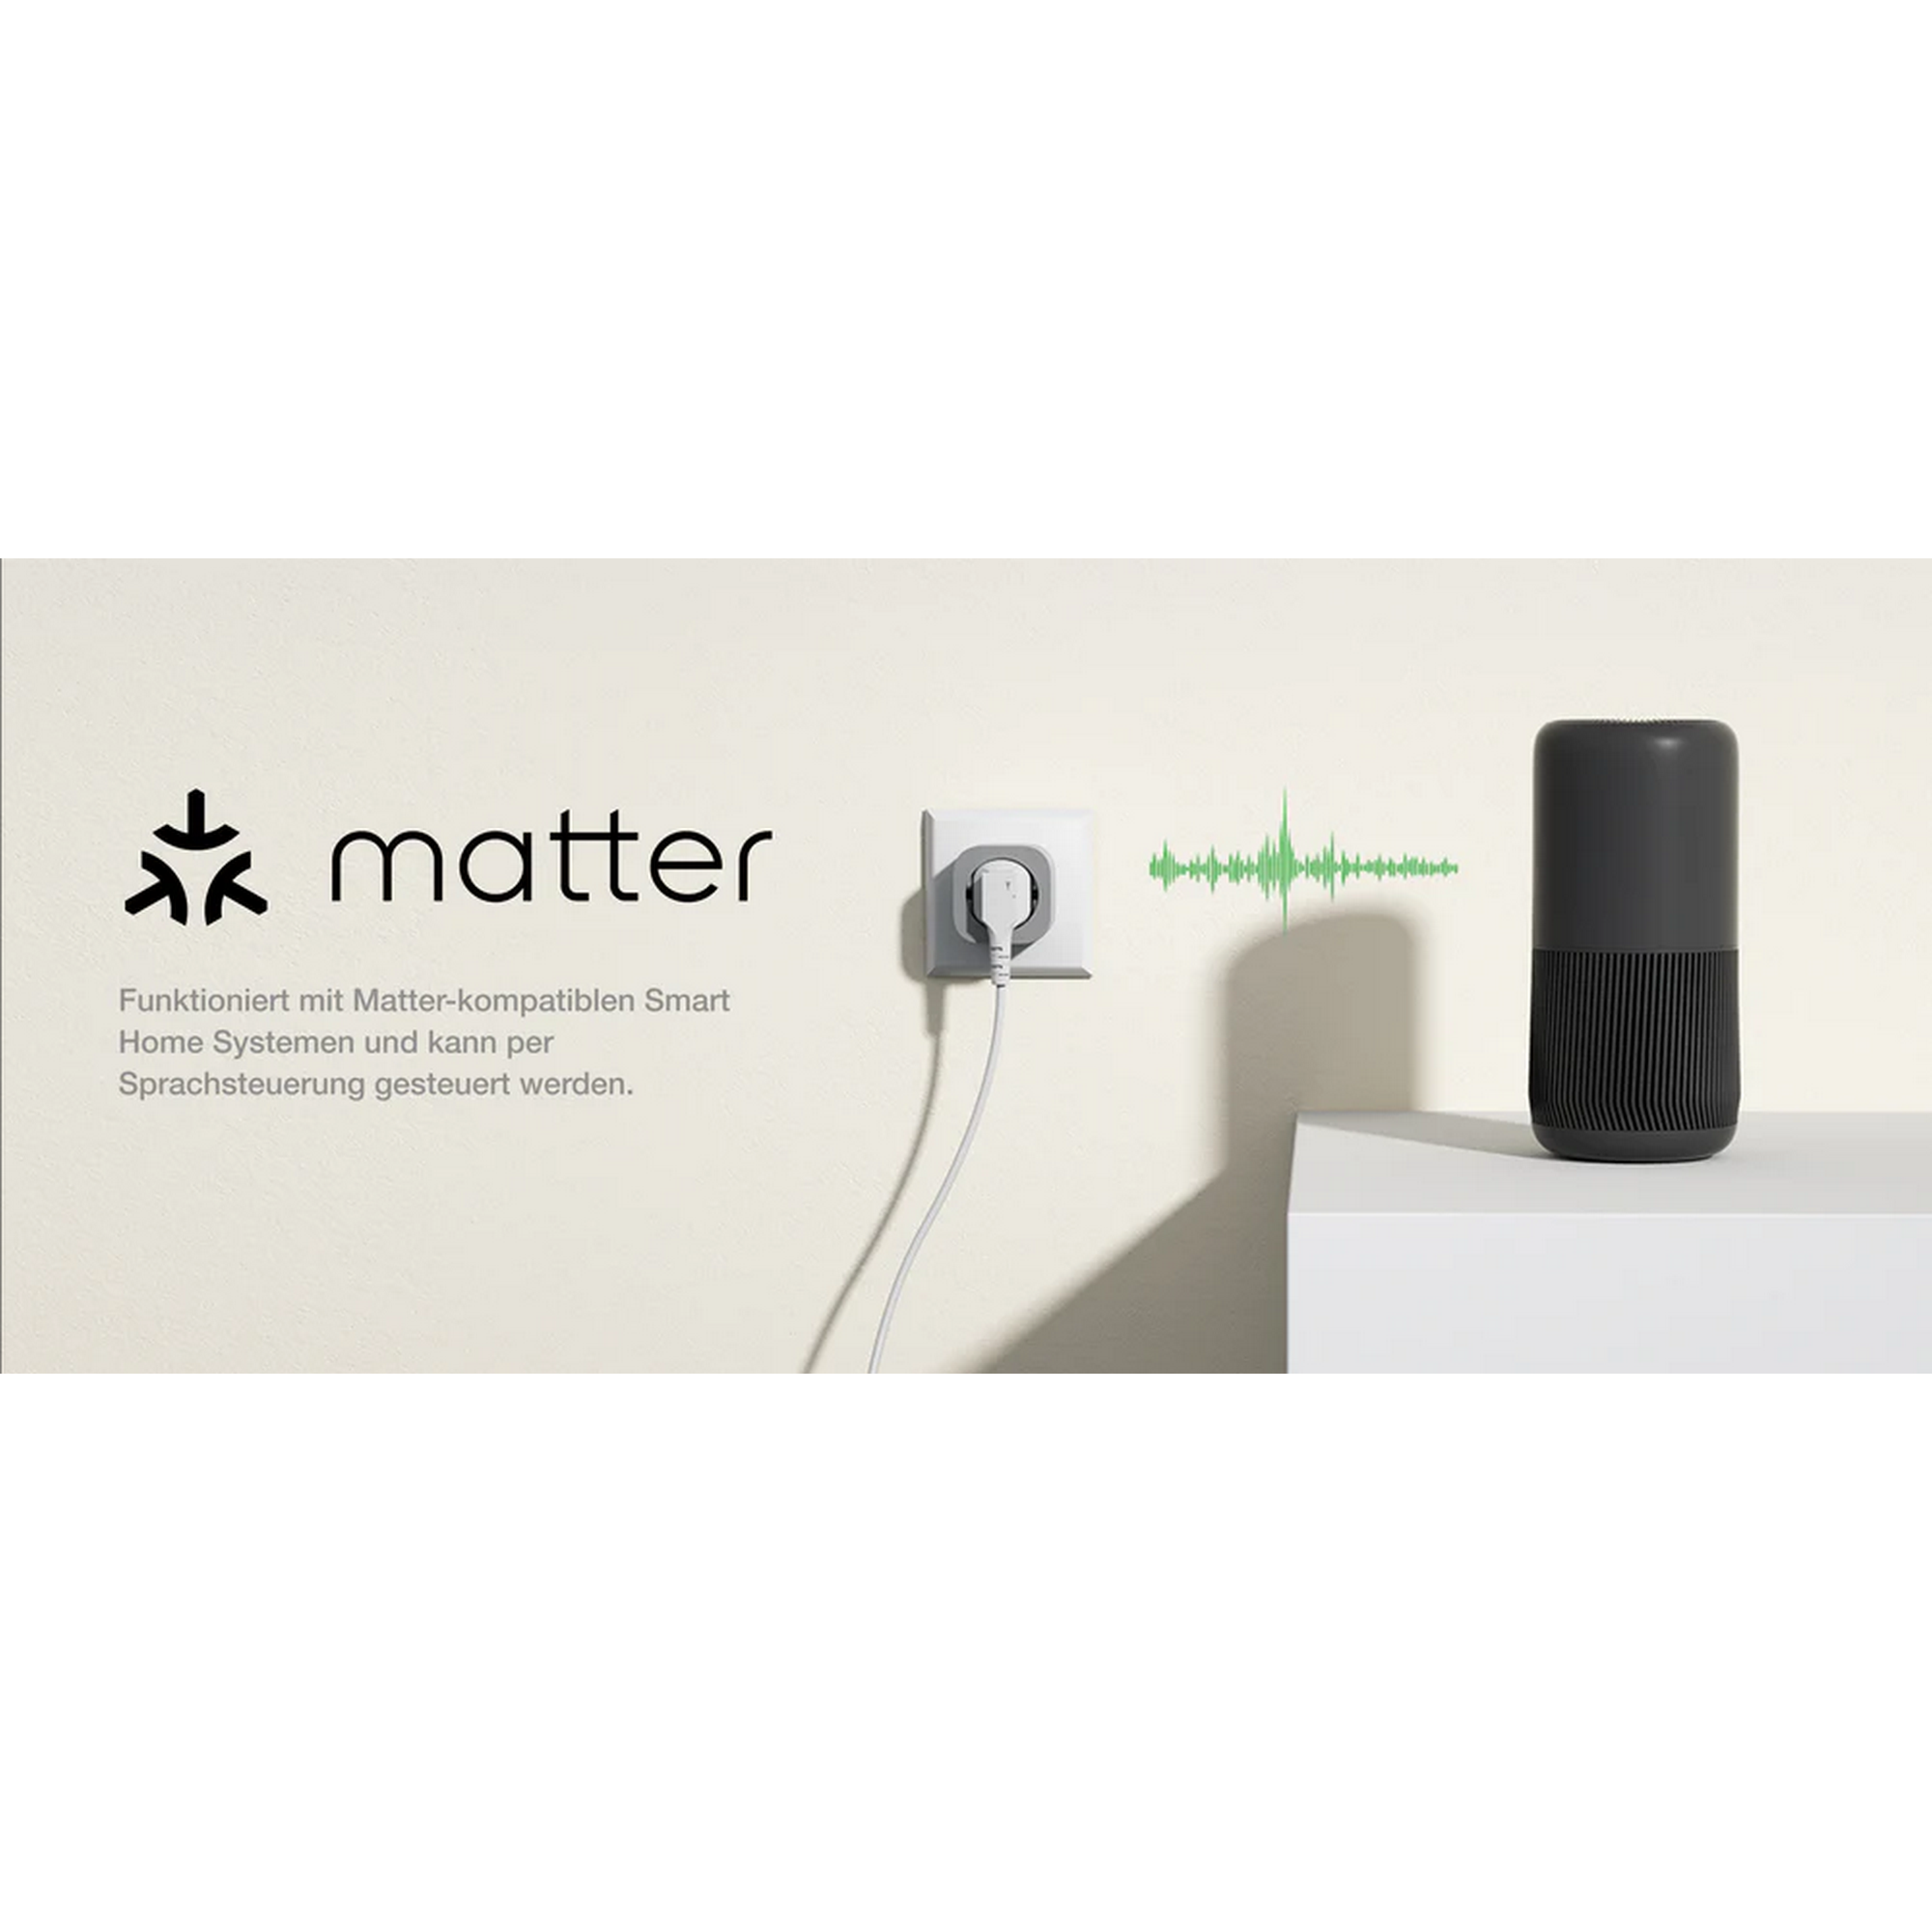 Wi-Fi-gesteuerter Stecker 'Smart Plug' + product picture